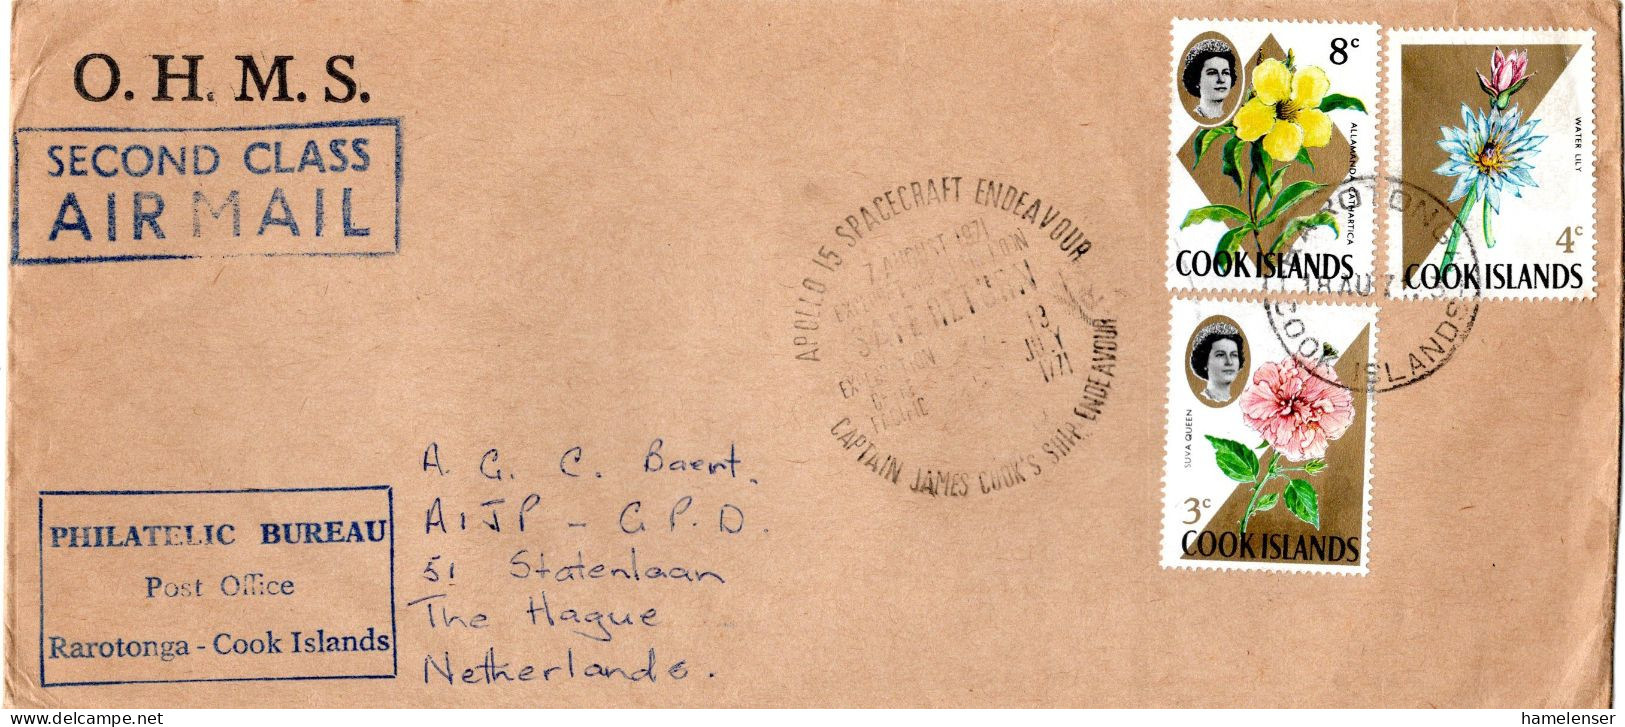 L75047 - Cook-Inseln - 1971 - 8c Blumen MiF A LpBf RAROTONGA -> Niederlande - Cook Islands